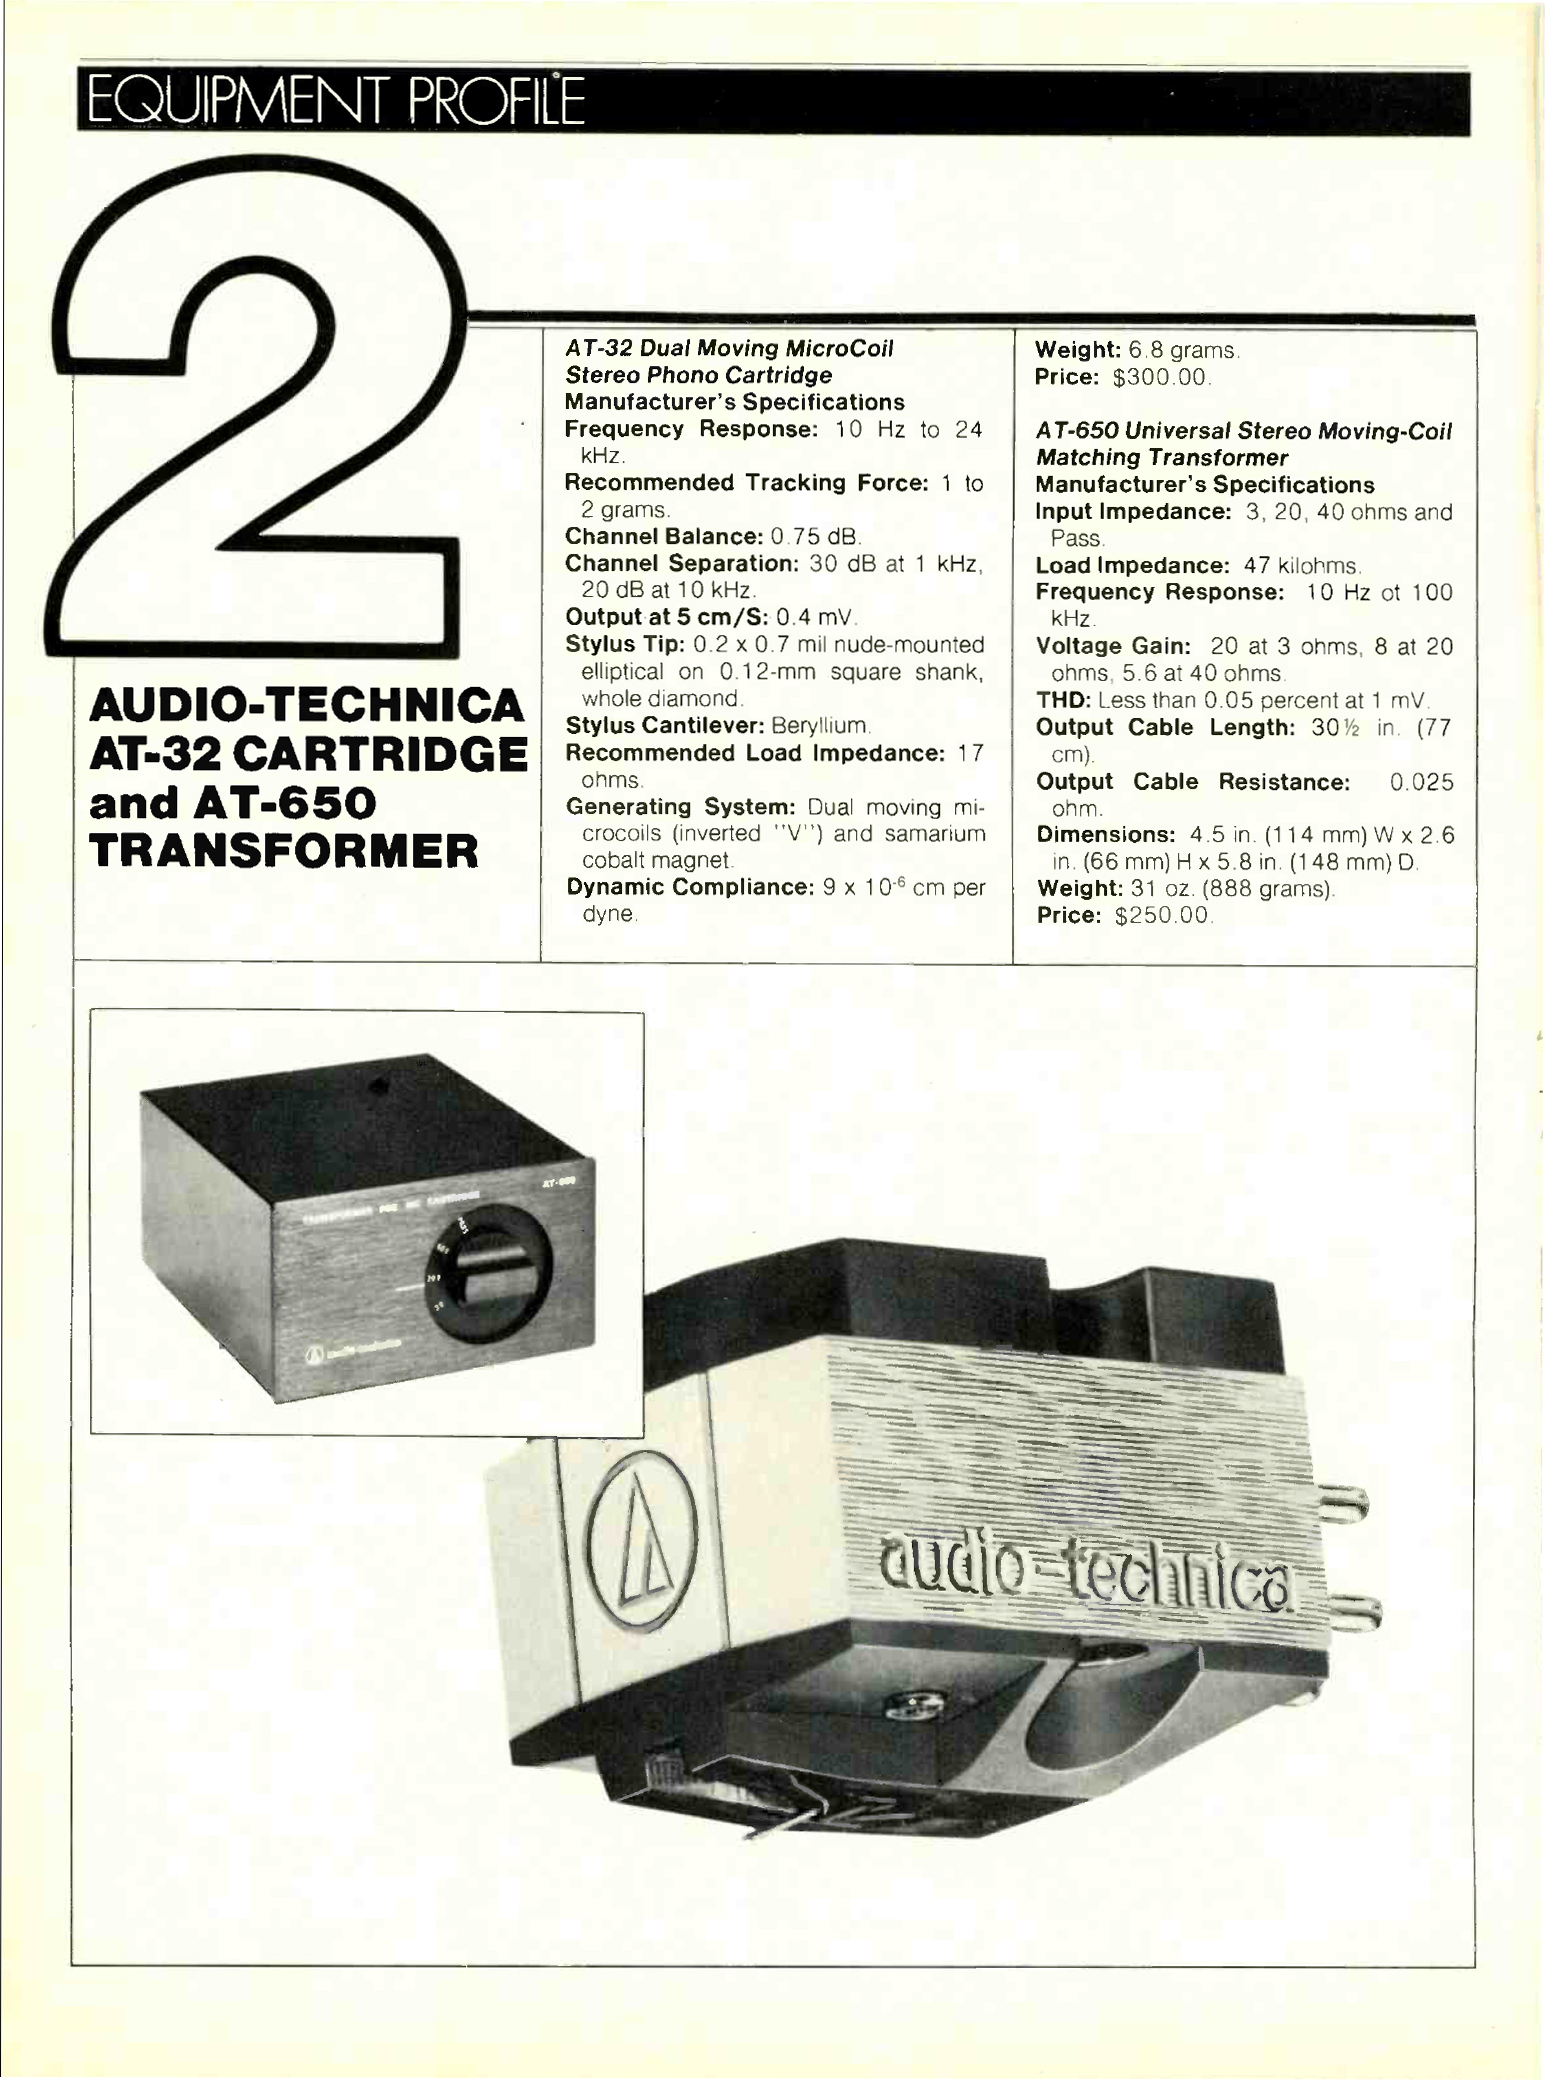 Audio Technica AT-32-Werbung-1981.jpg